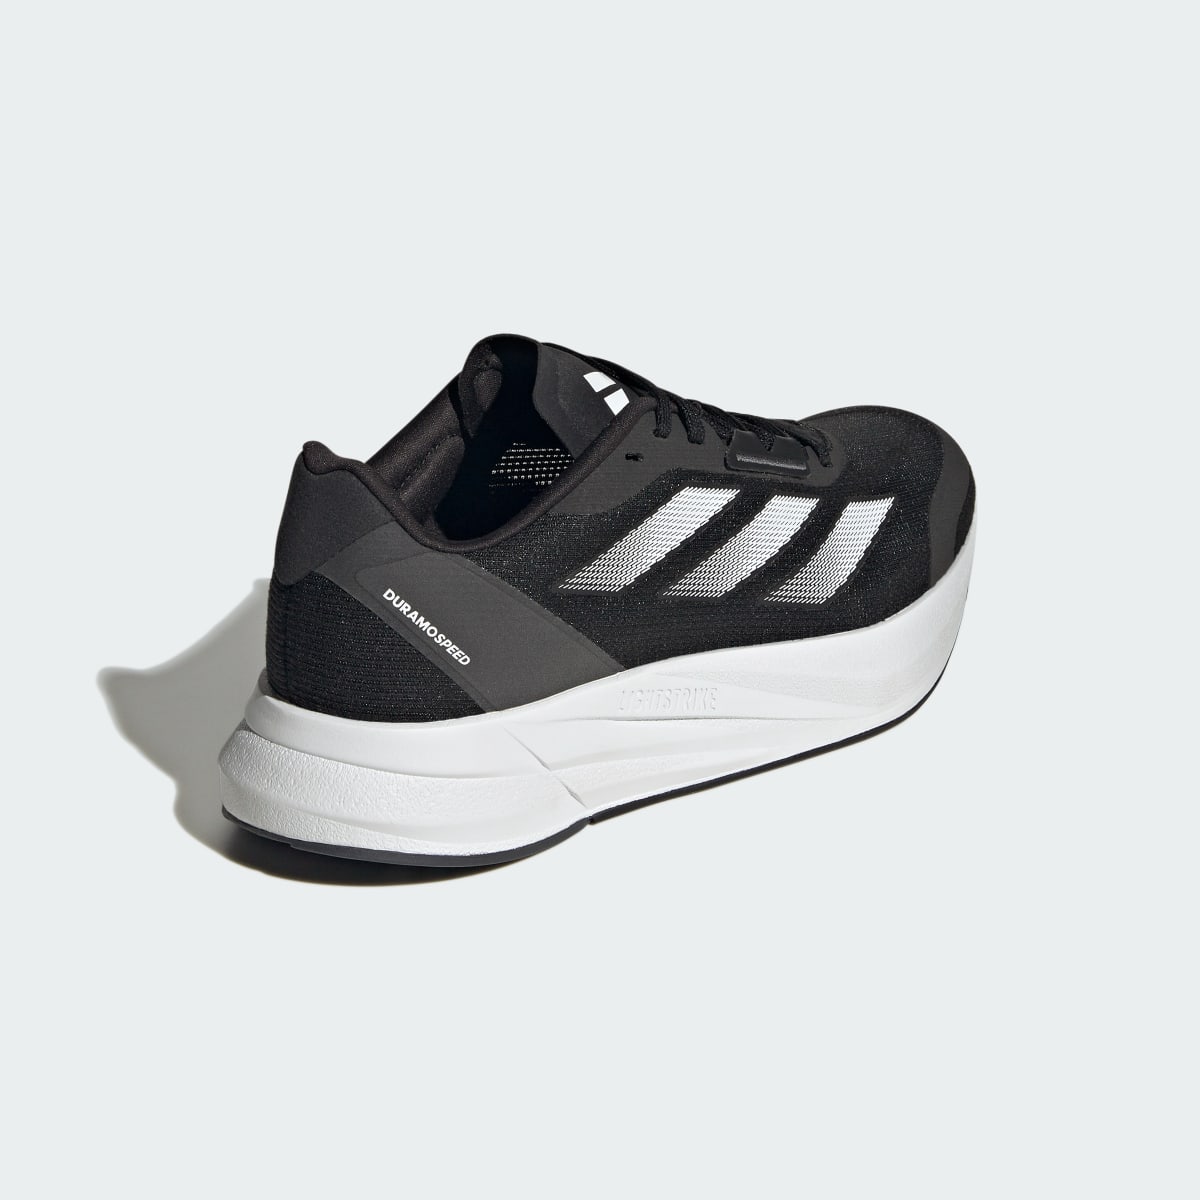 Adidas Duramo Speed Running Shoes. 6